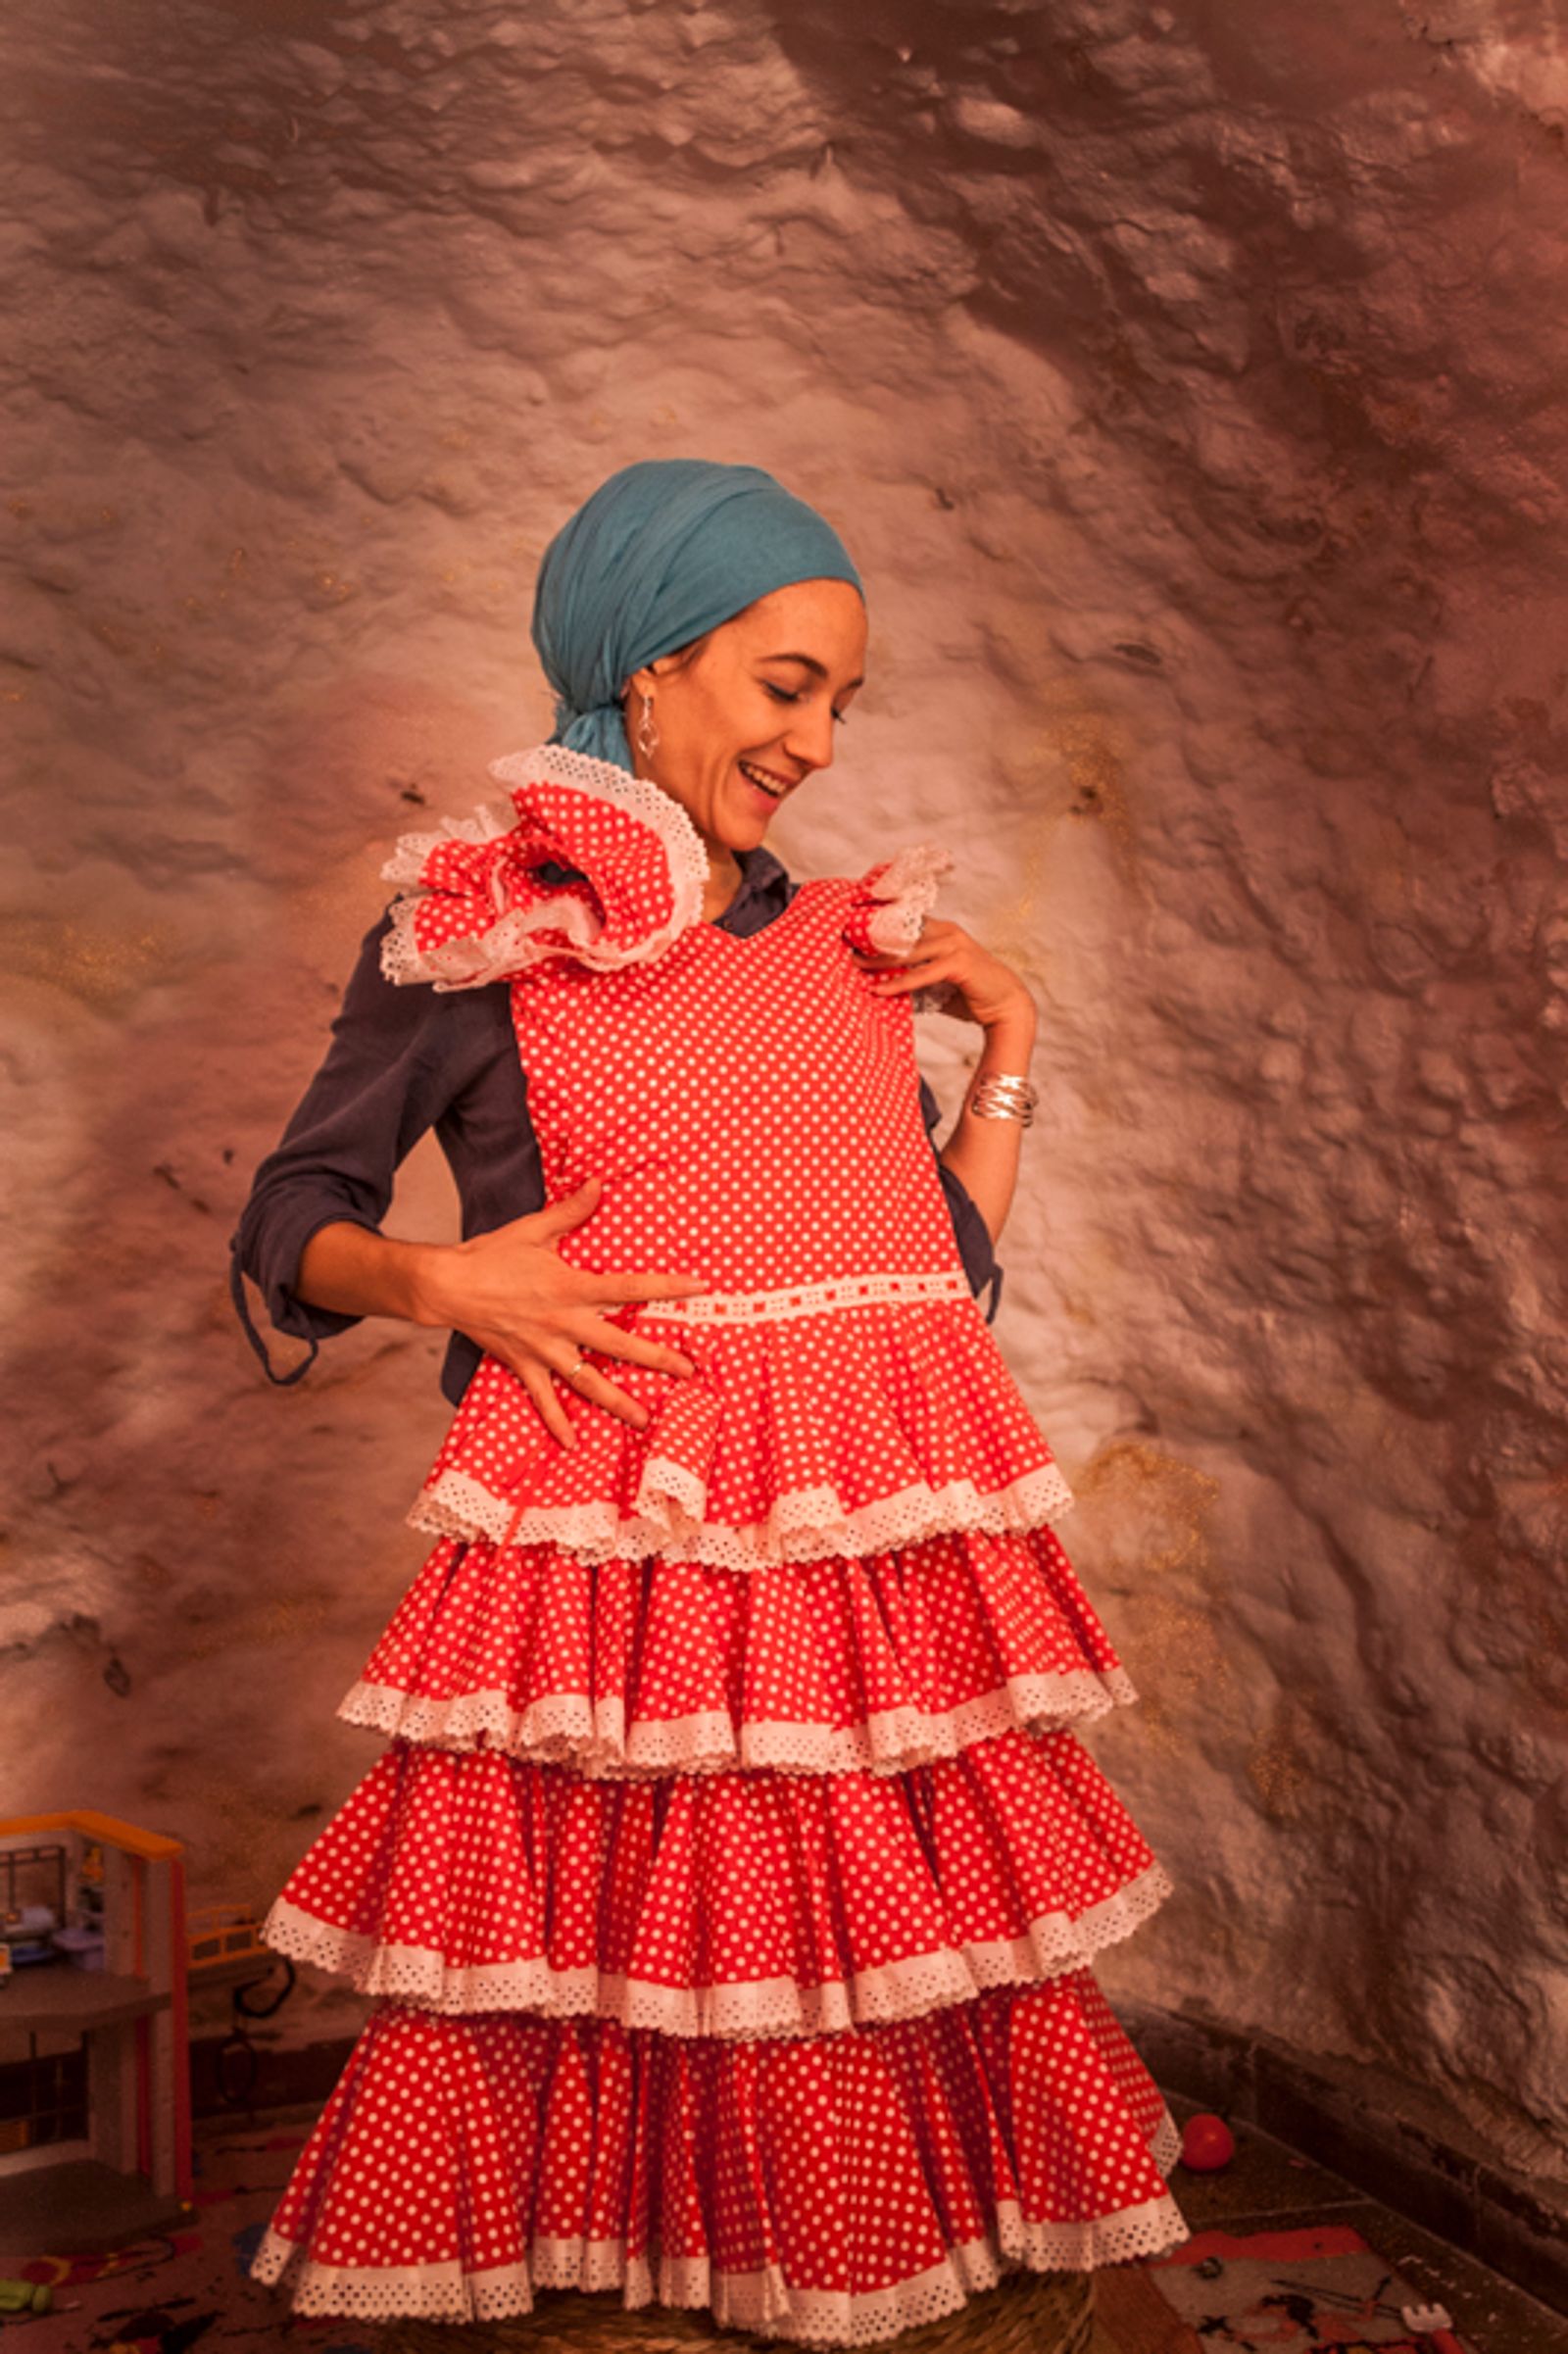 © Chiara Ferronato - Zahara playing with her daughter’s flamenco dress in her parents’ "casa cueva".